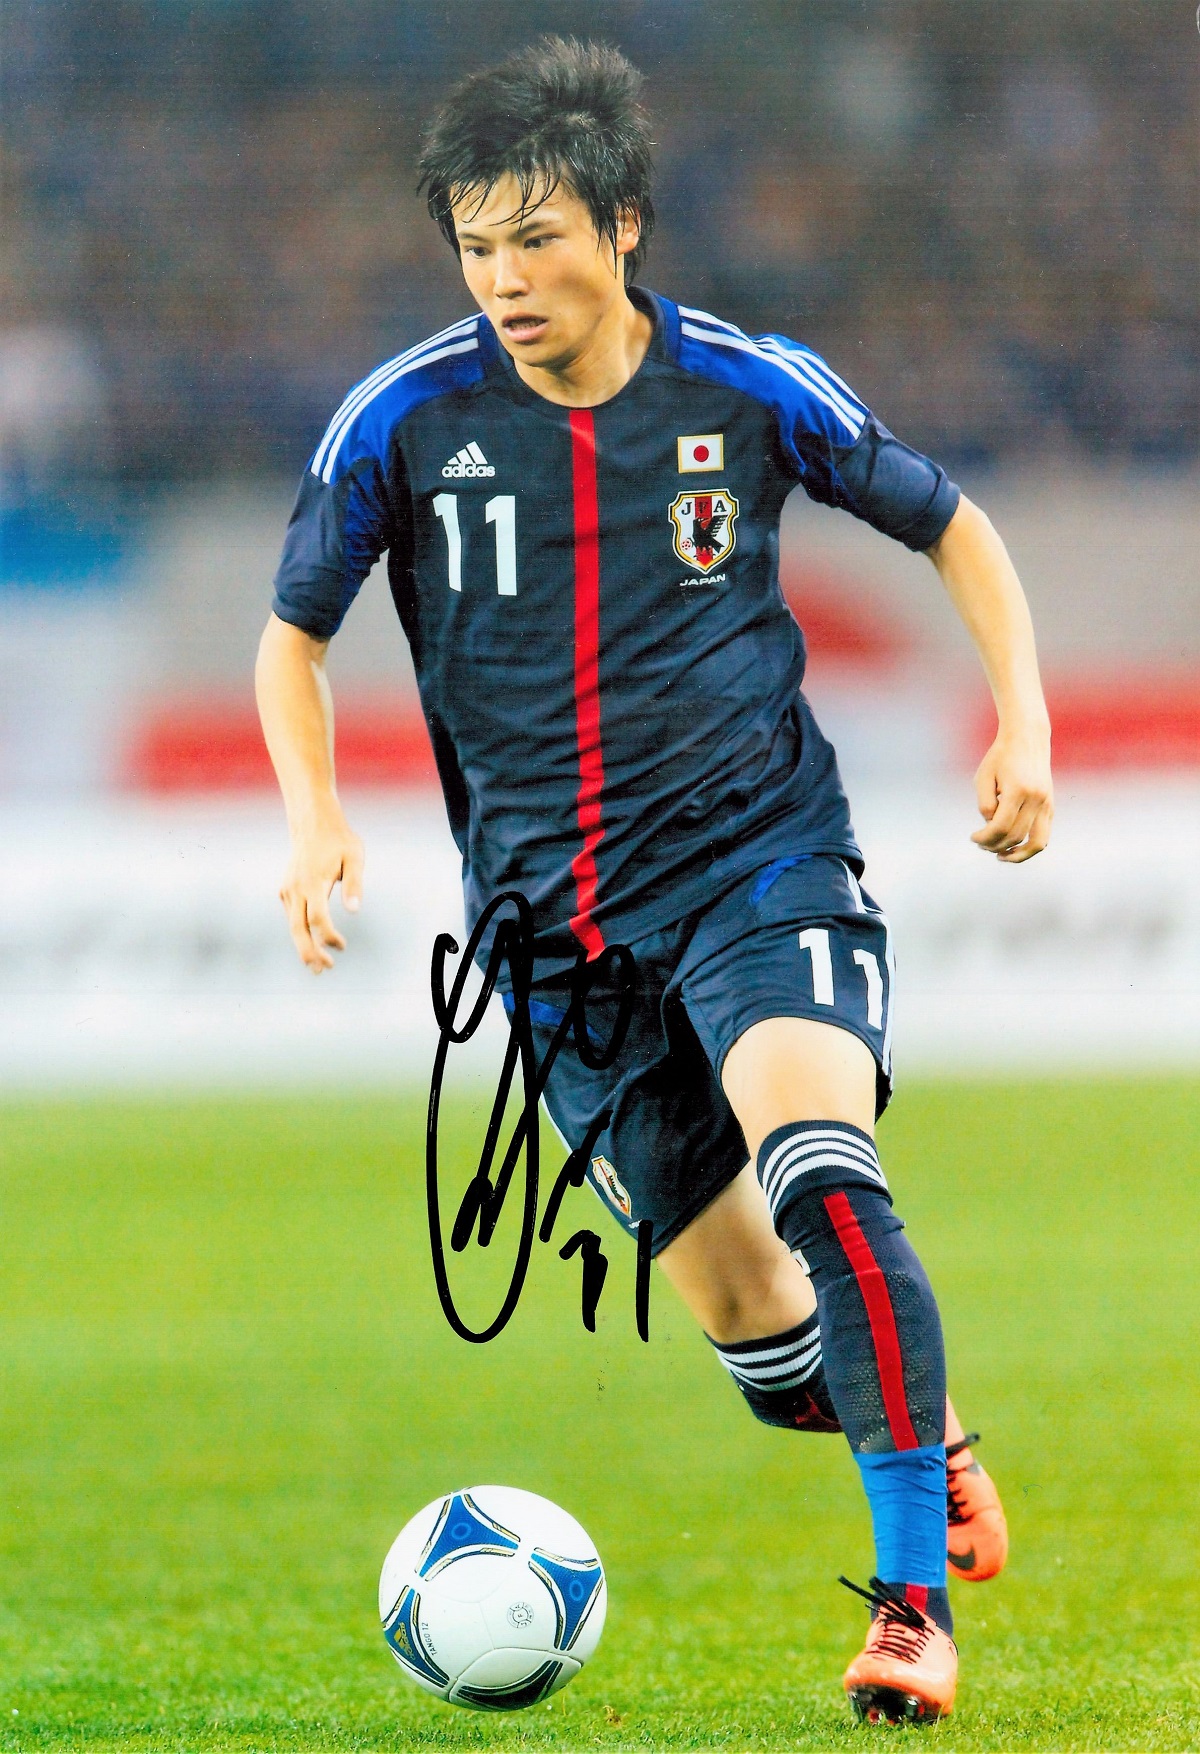 Football Kyogo Furuhashi Japan 12x8 Coloured signed photo. Good condition. All autographs come